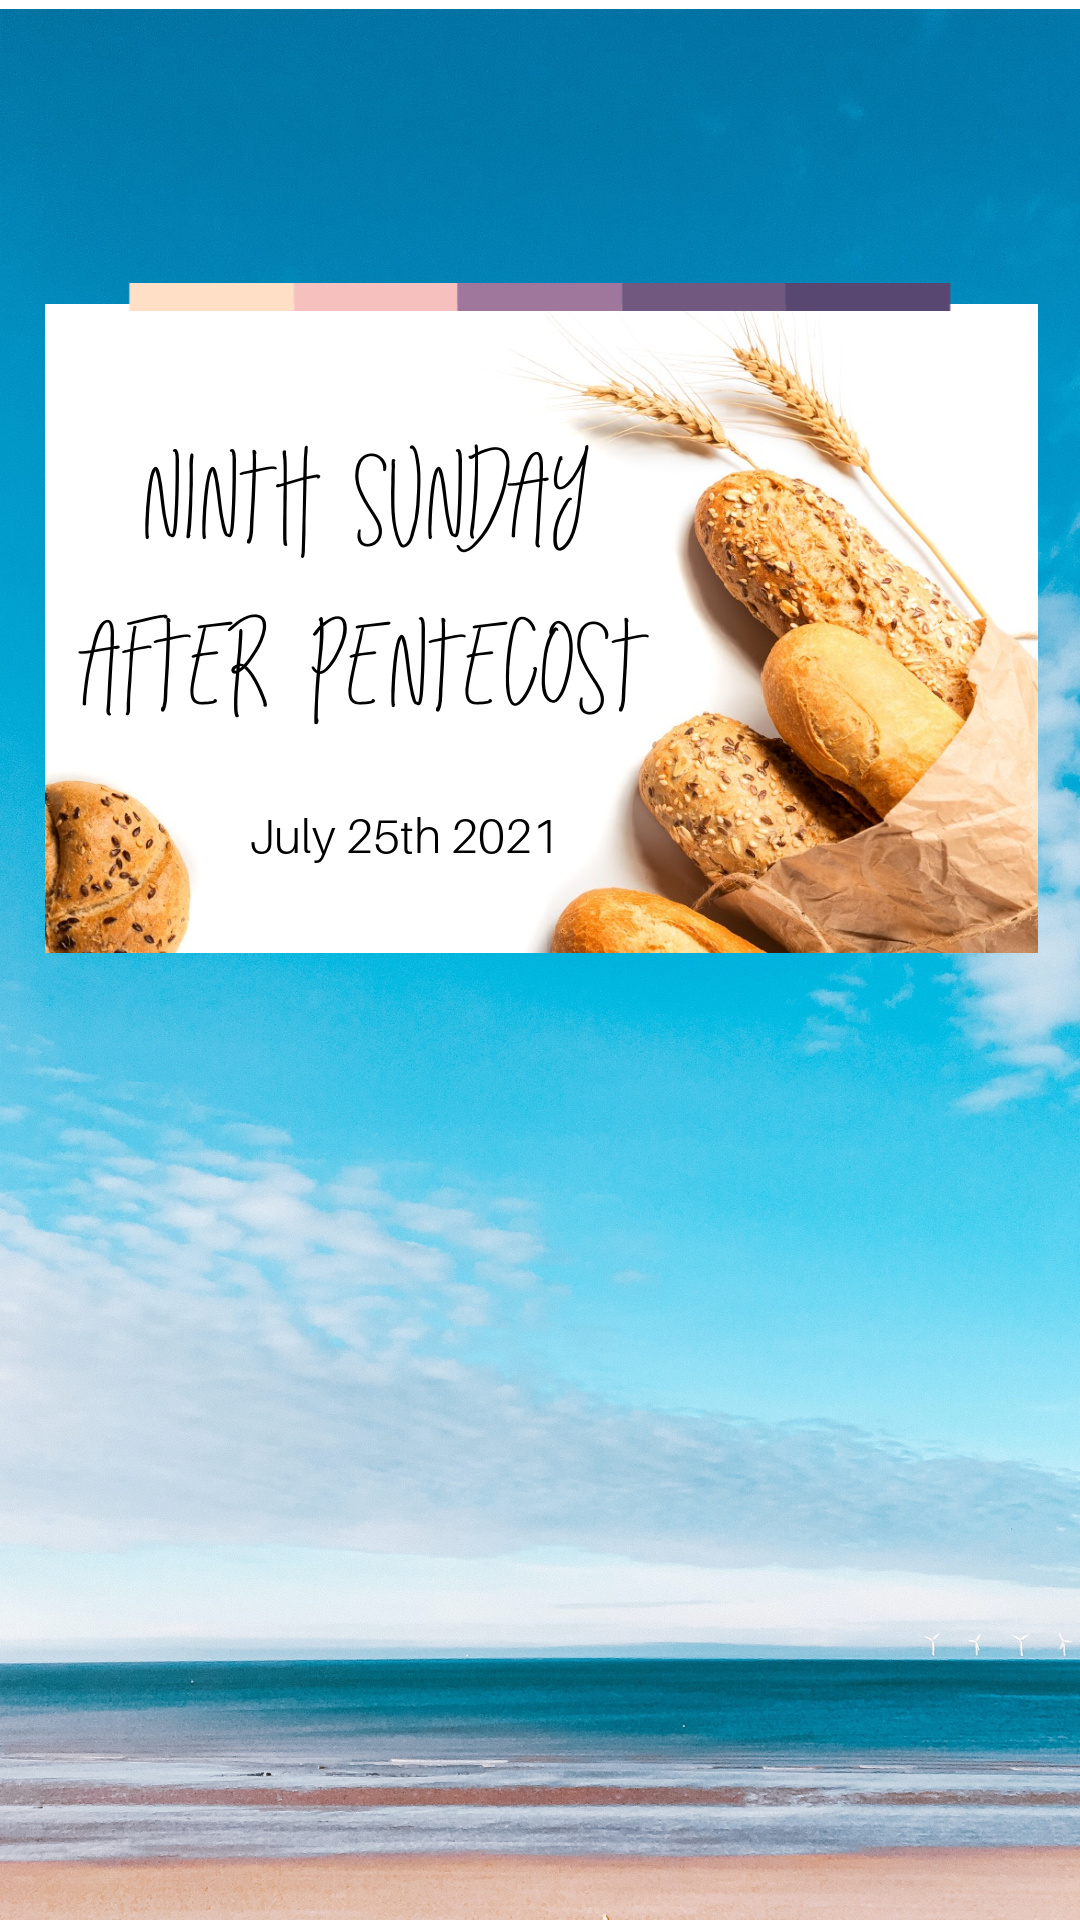 Ninth Sunday after Pentecost